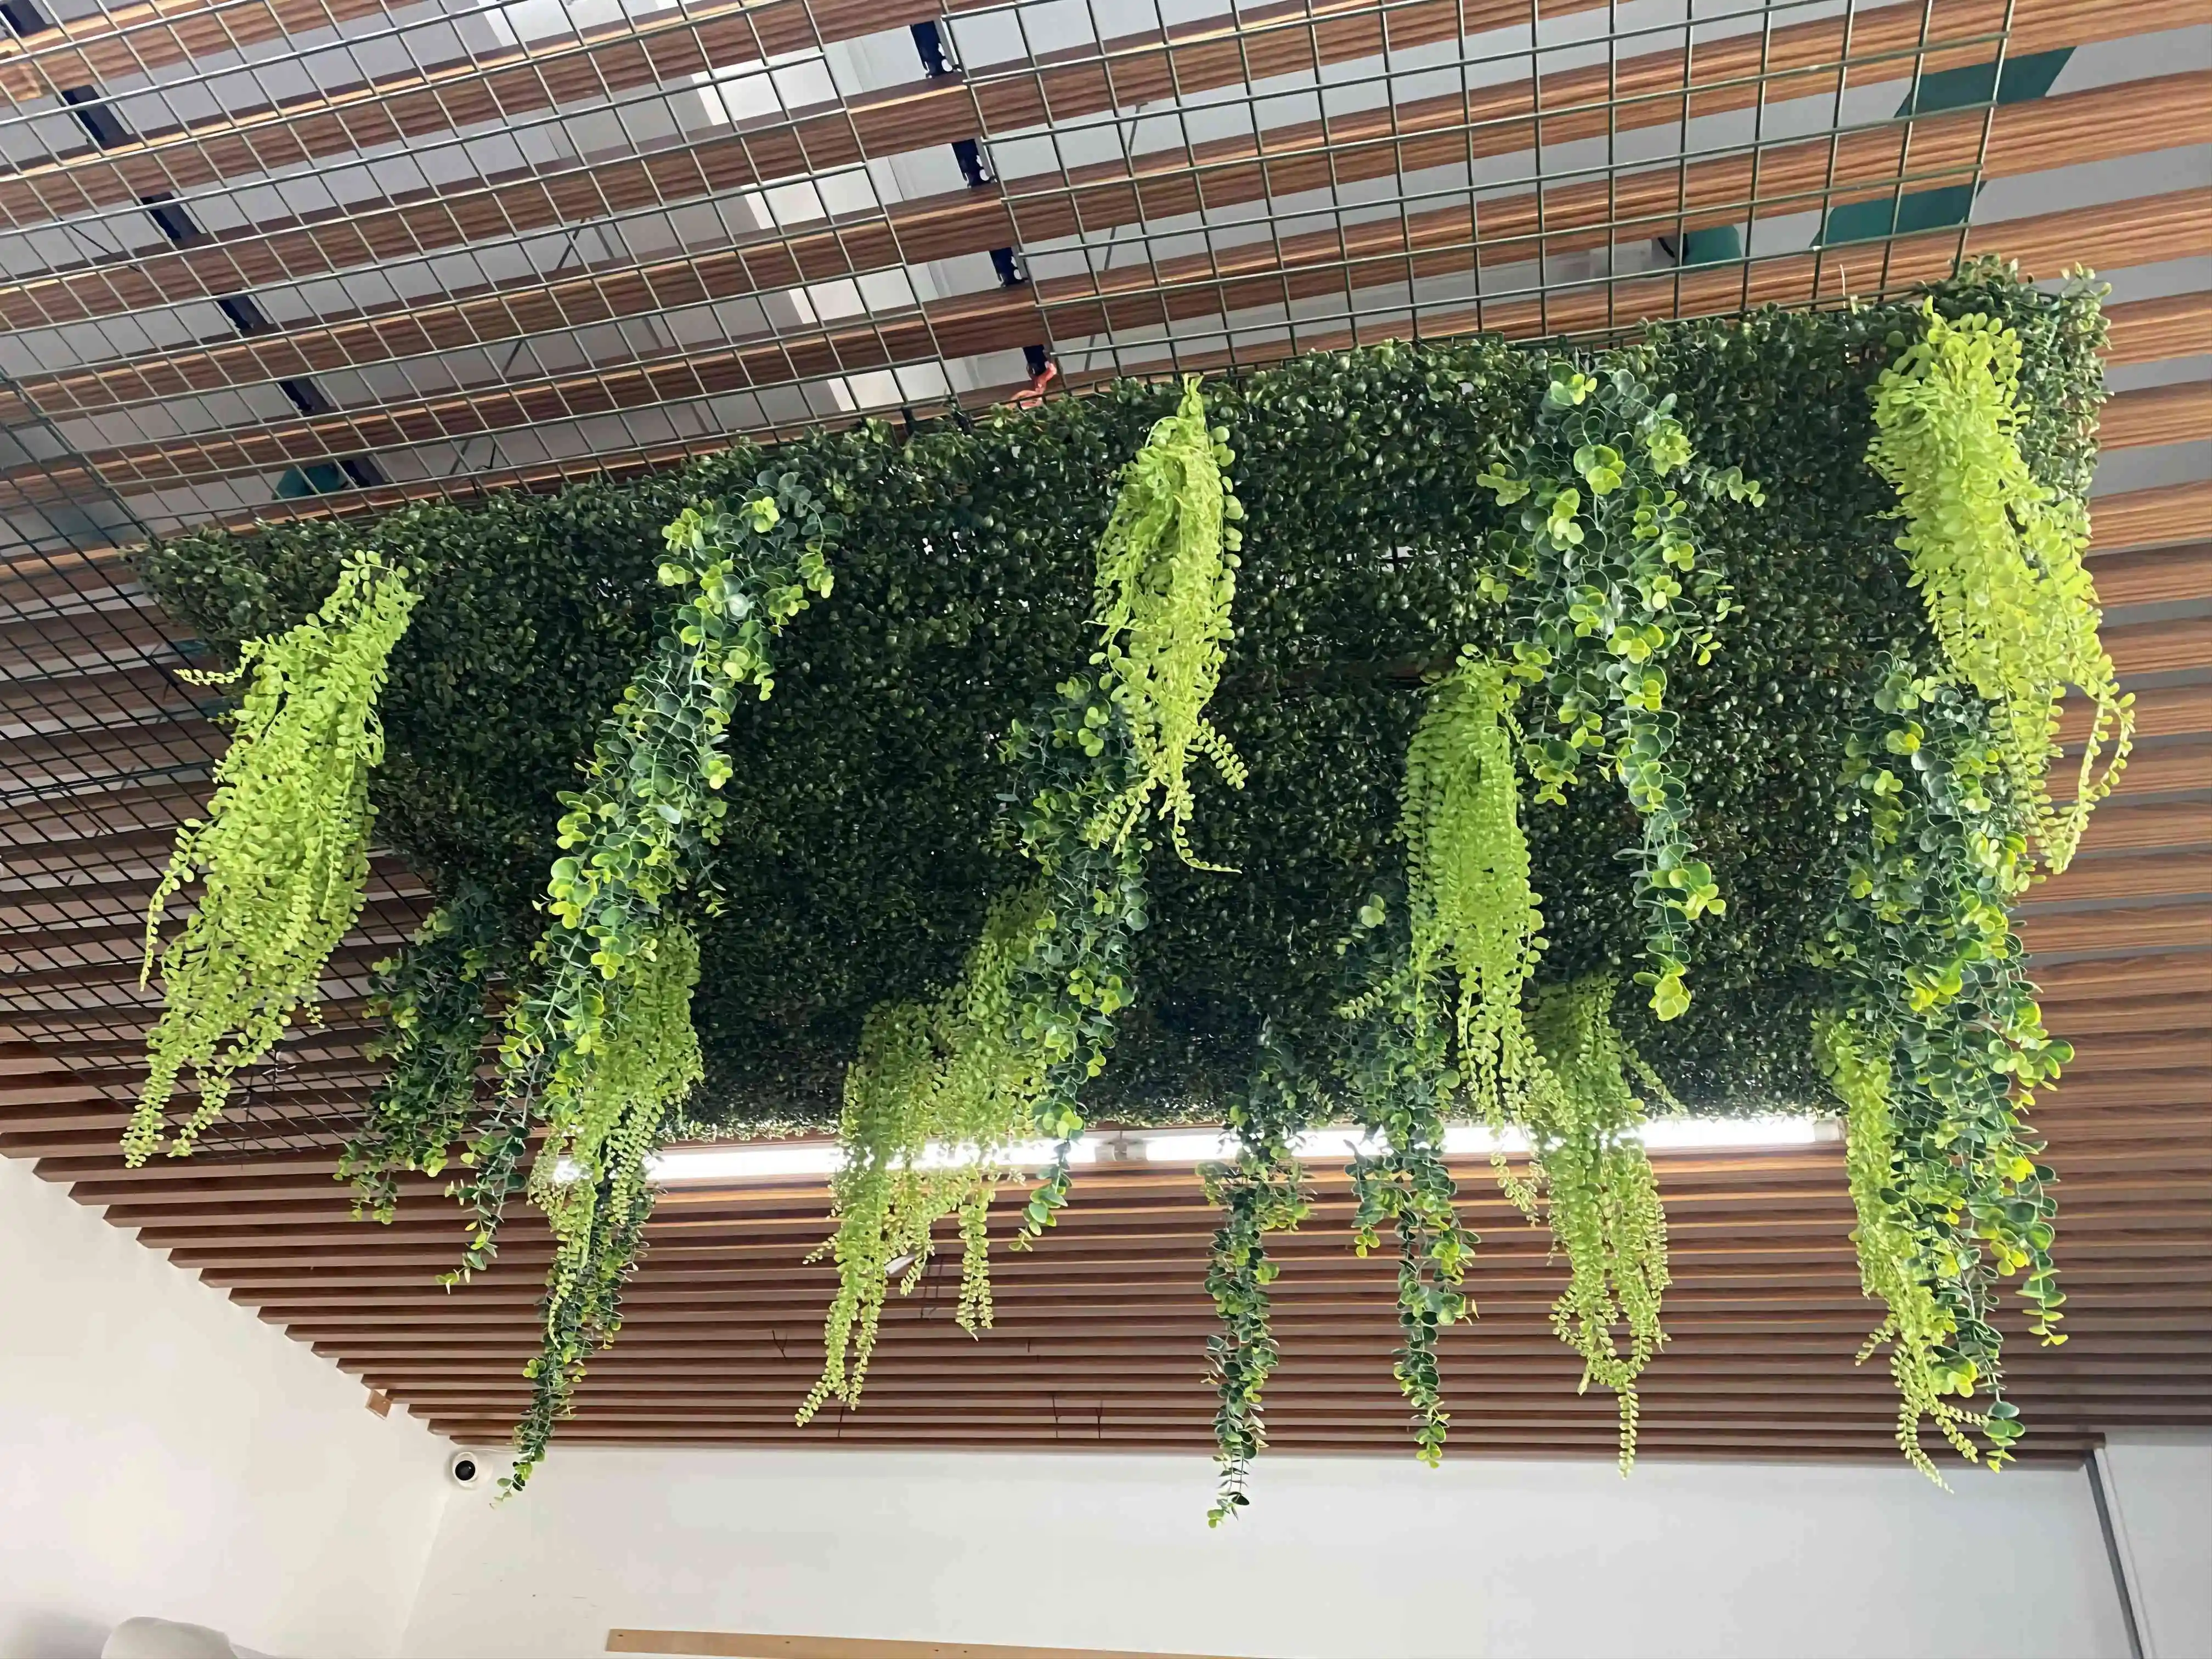 Piante decorative appese da parete per interni all'aperto appesa a parete pianta artificiale appesa a soffitto